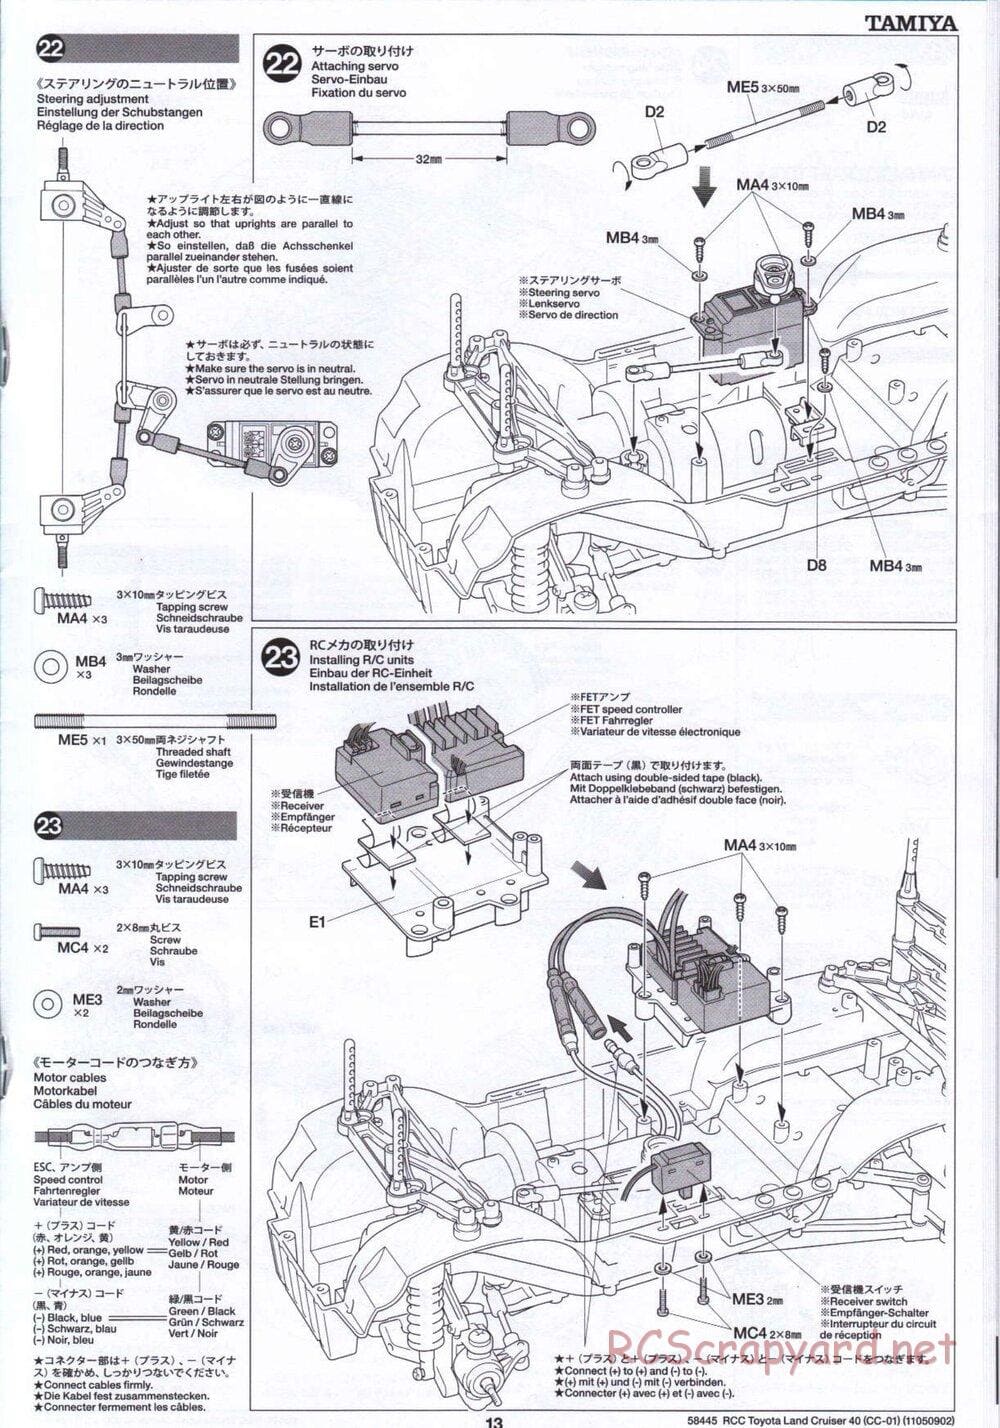 Tamiya - Toyota Land Cruiser 40 - CC-01 Chassis - Manual - Page 13